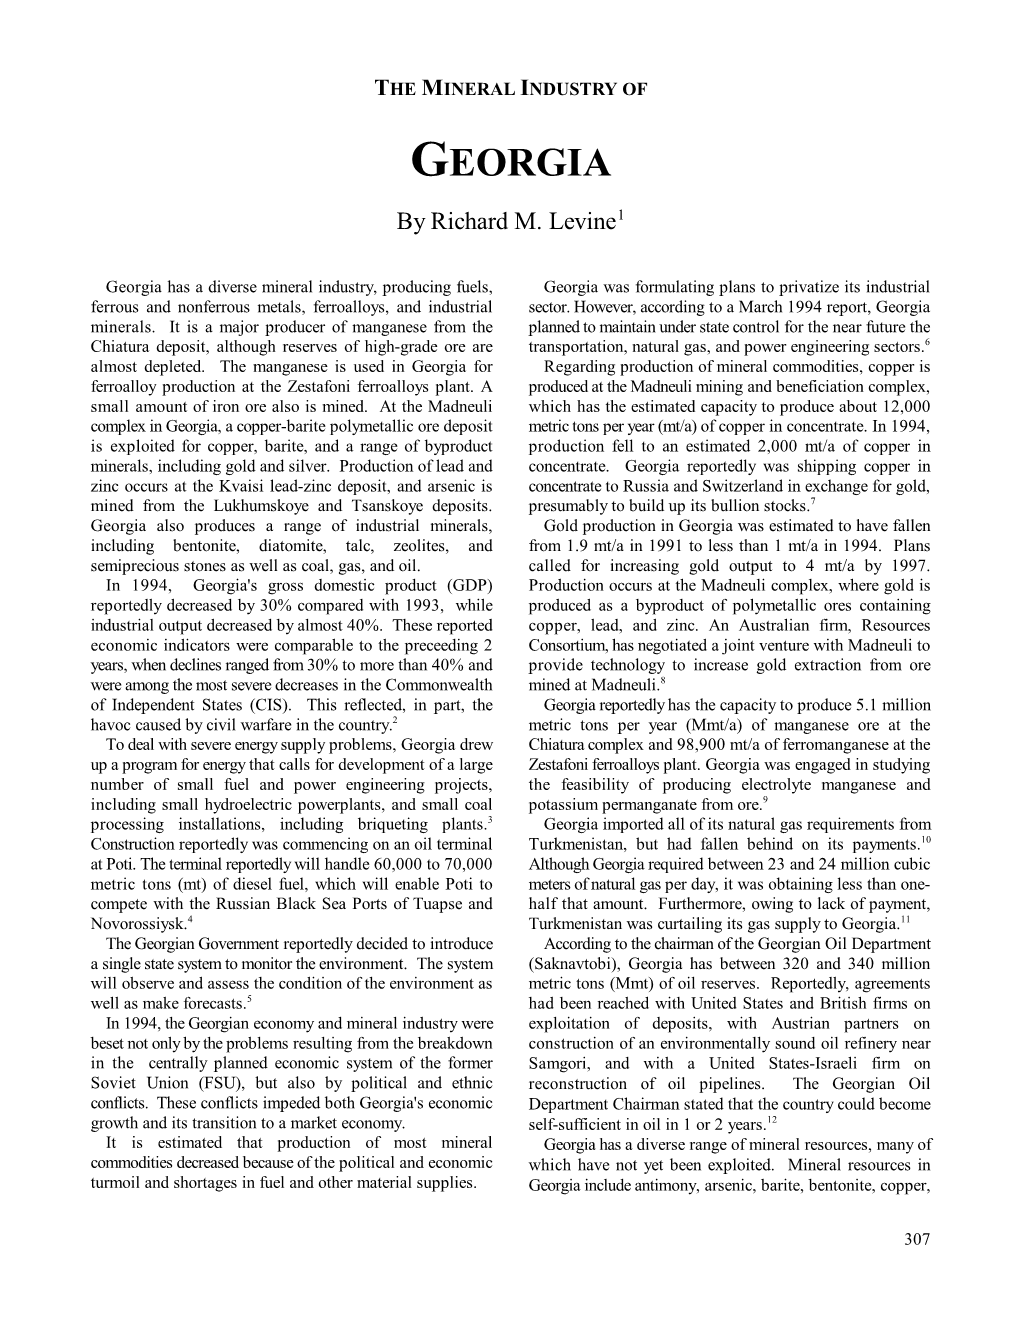 GEORGIA by Richard M